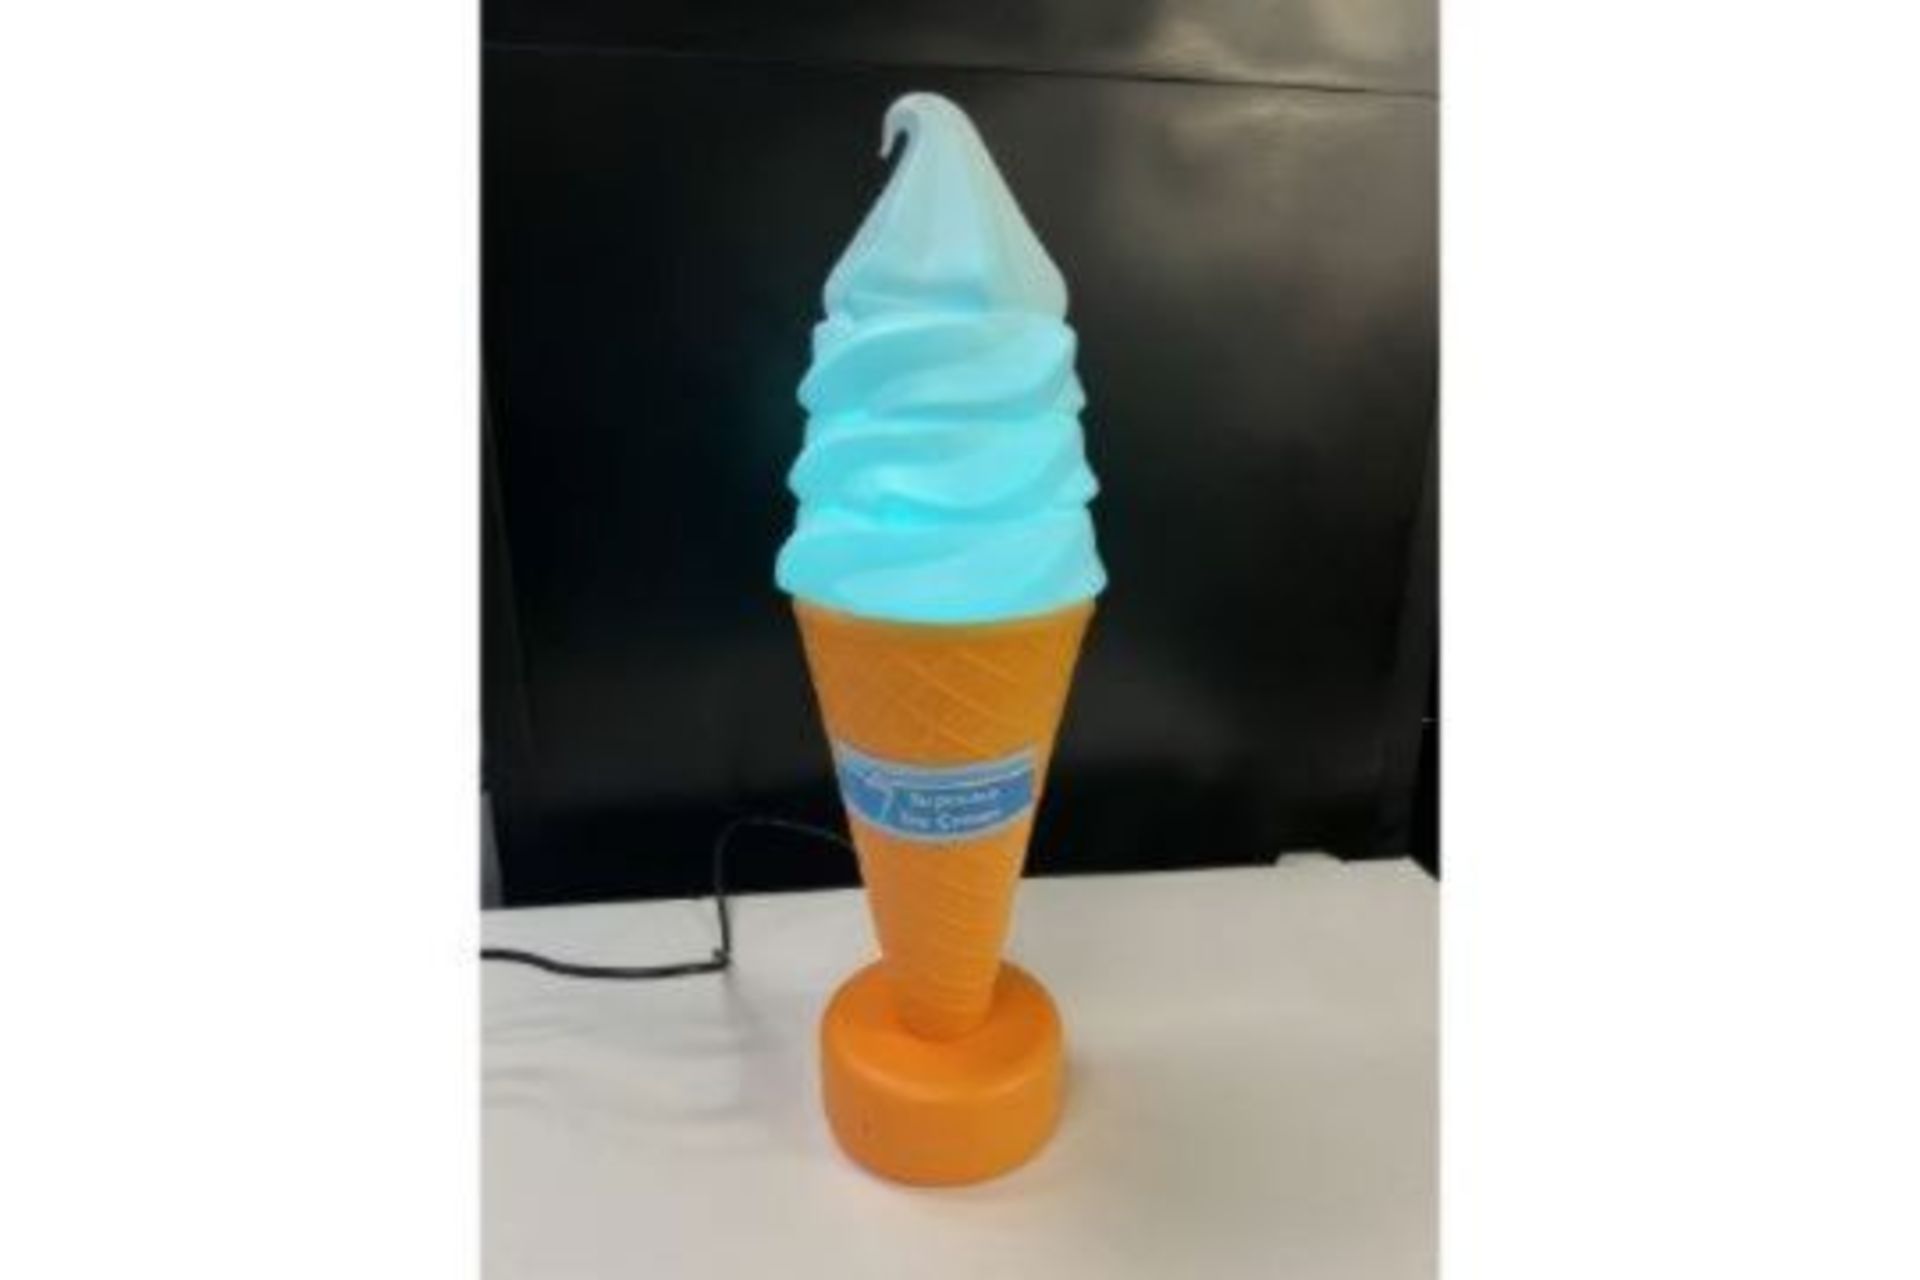 Illuminated ice cream cone display. - Image 6 of 9